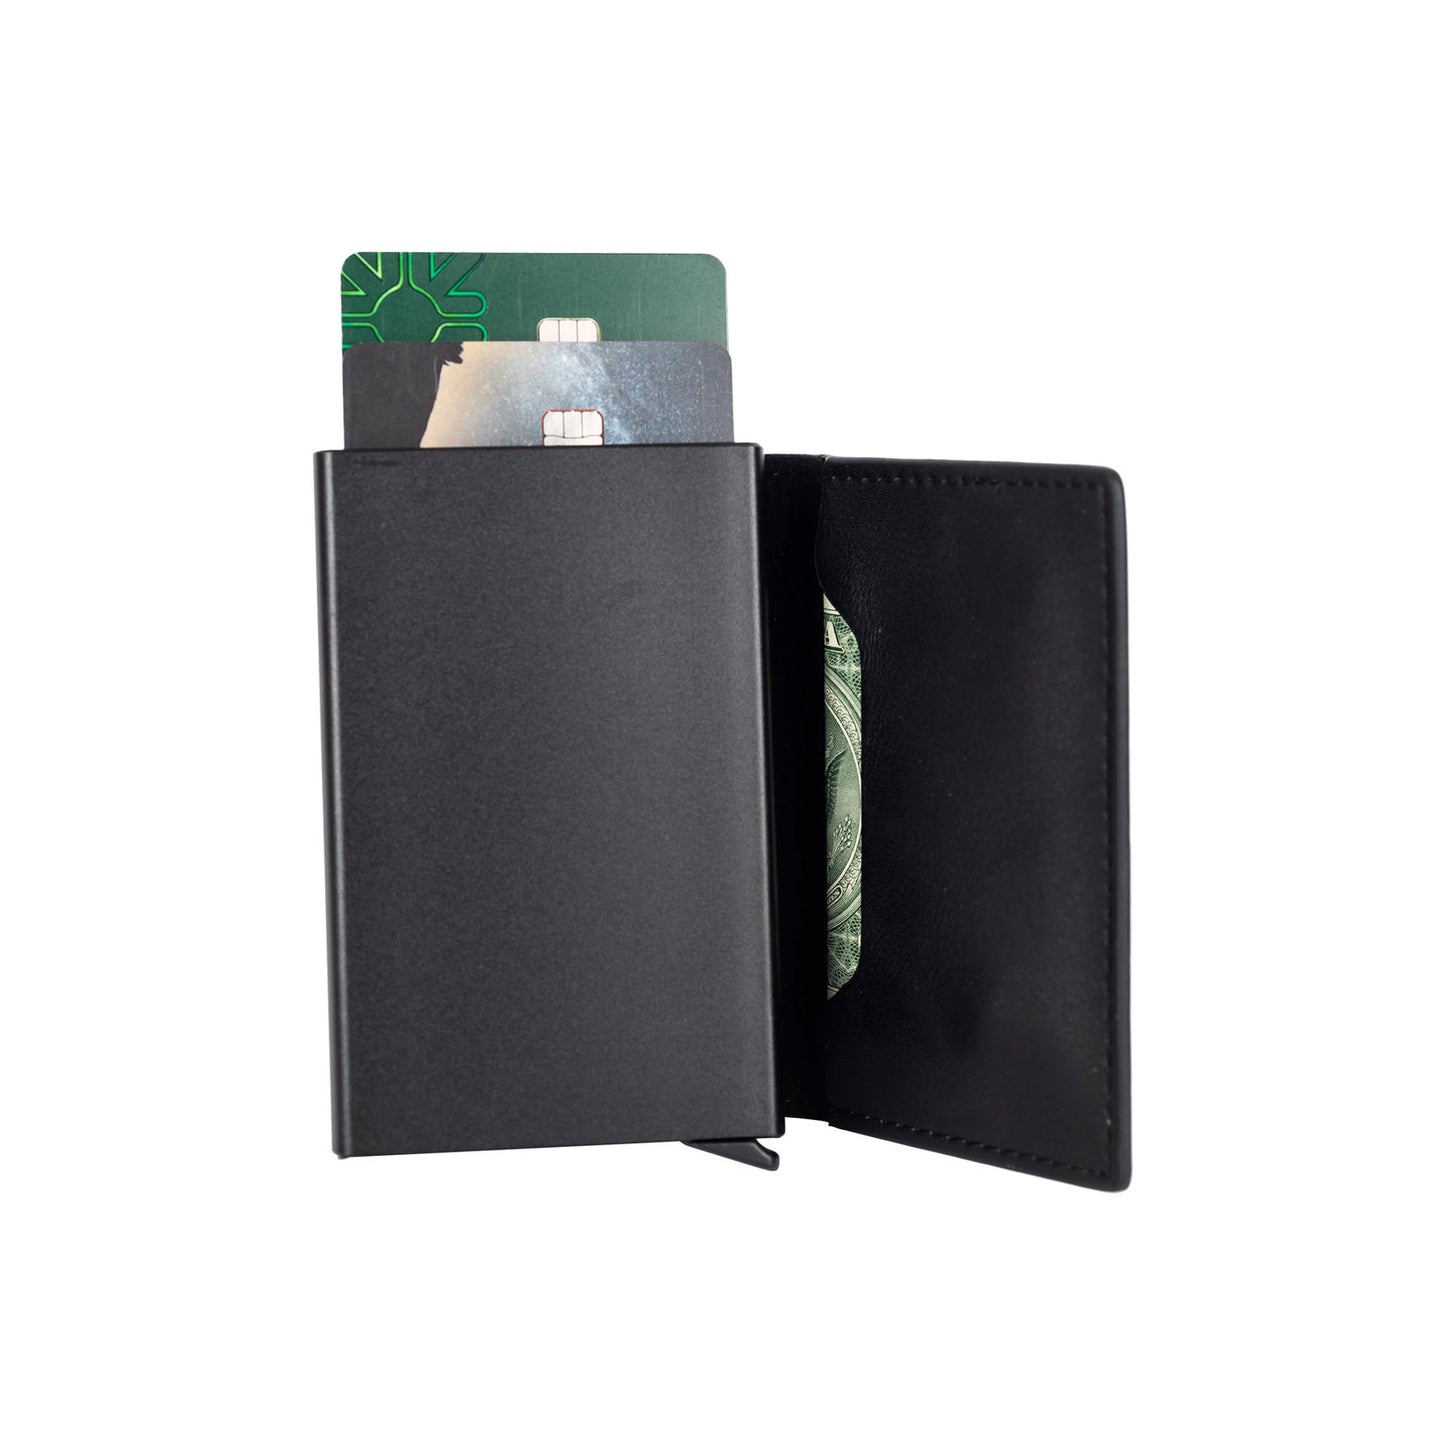 Leather RFID Wallet in Black